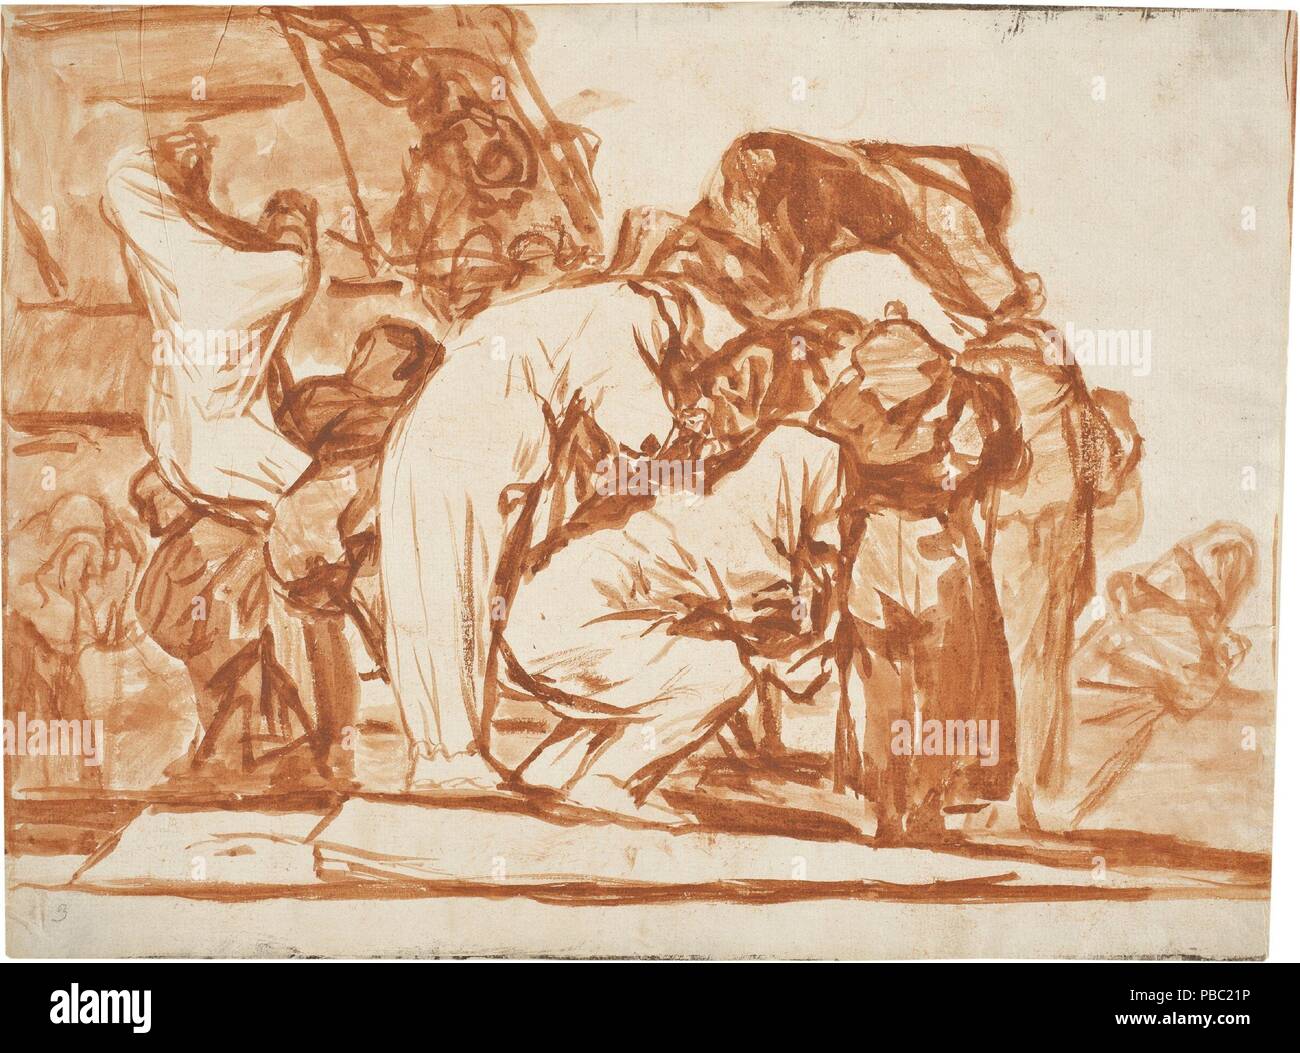 Francisco de Goya y Lucientes/' Menschen in Säcken. 1815 - 1819. Red Wash, Rote Kreide auf Elfenbein Bütten. Museum: Museo del Prado, Madrid, España. Stockfoto